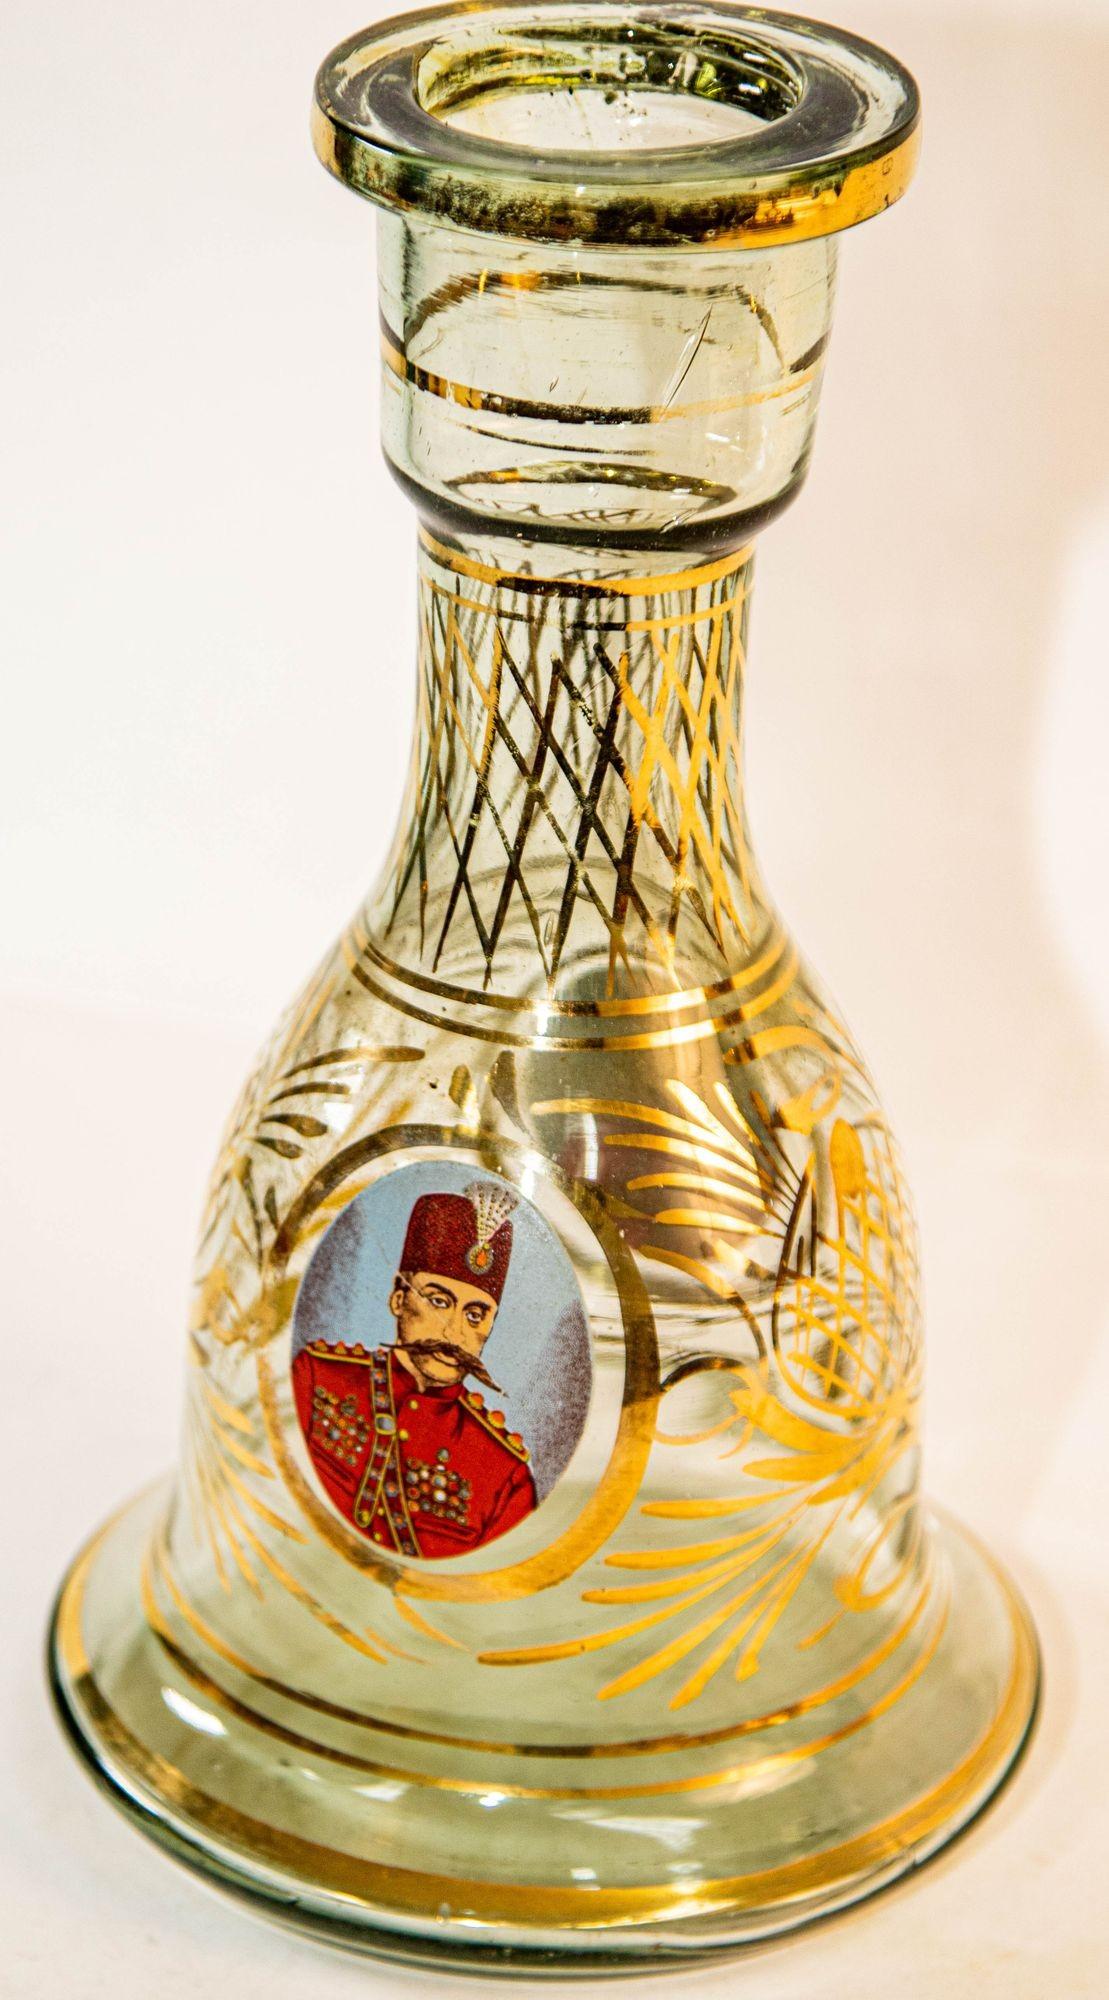 Vintage Turkish enameled Bohemian glass hookah base vase.
Clear and gold enameled Bohemian glass hookah base, or flower vase.
Bohemian glass hookah base with overlay enameled in gold, red, and blue with additional gilt.
The elegant bell shape